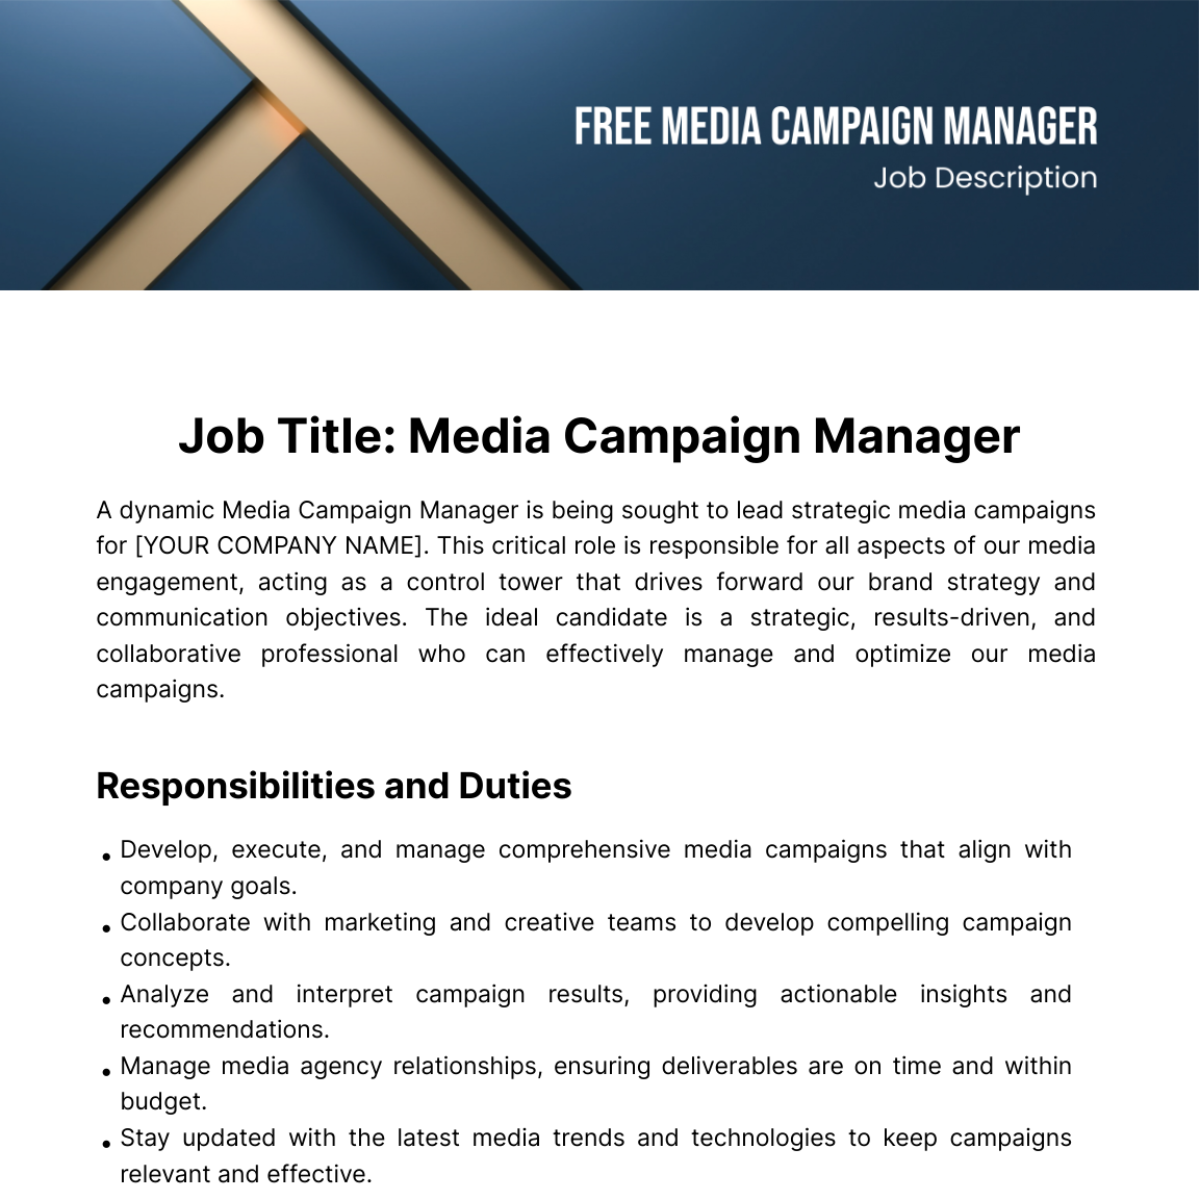 Free Media Campaign Manager Job Description Template